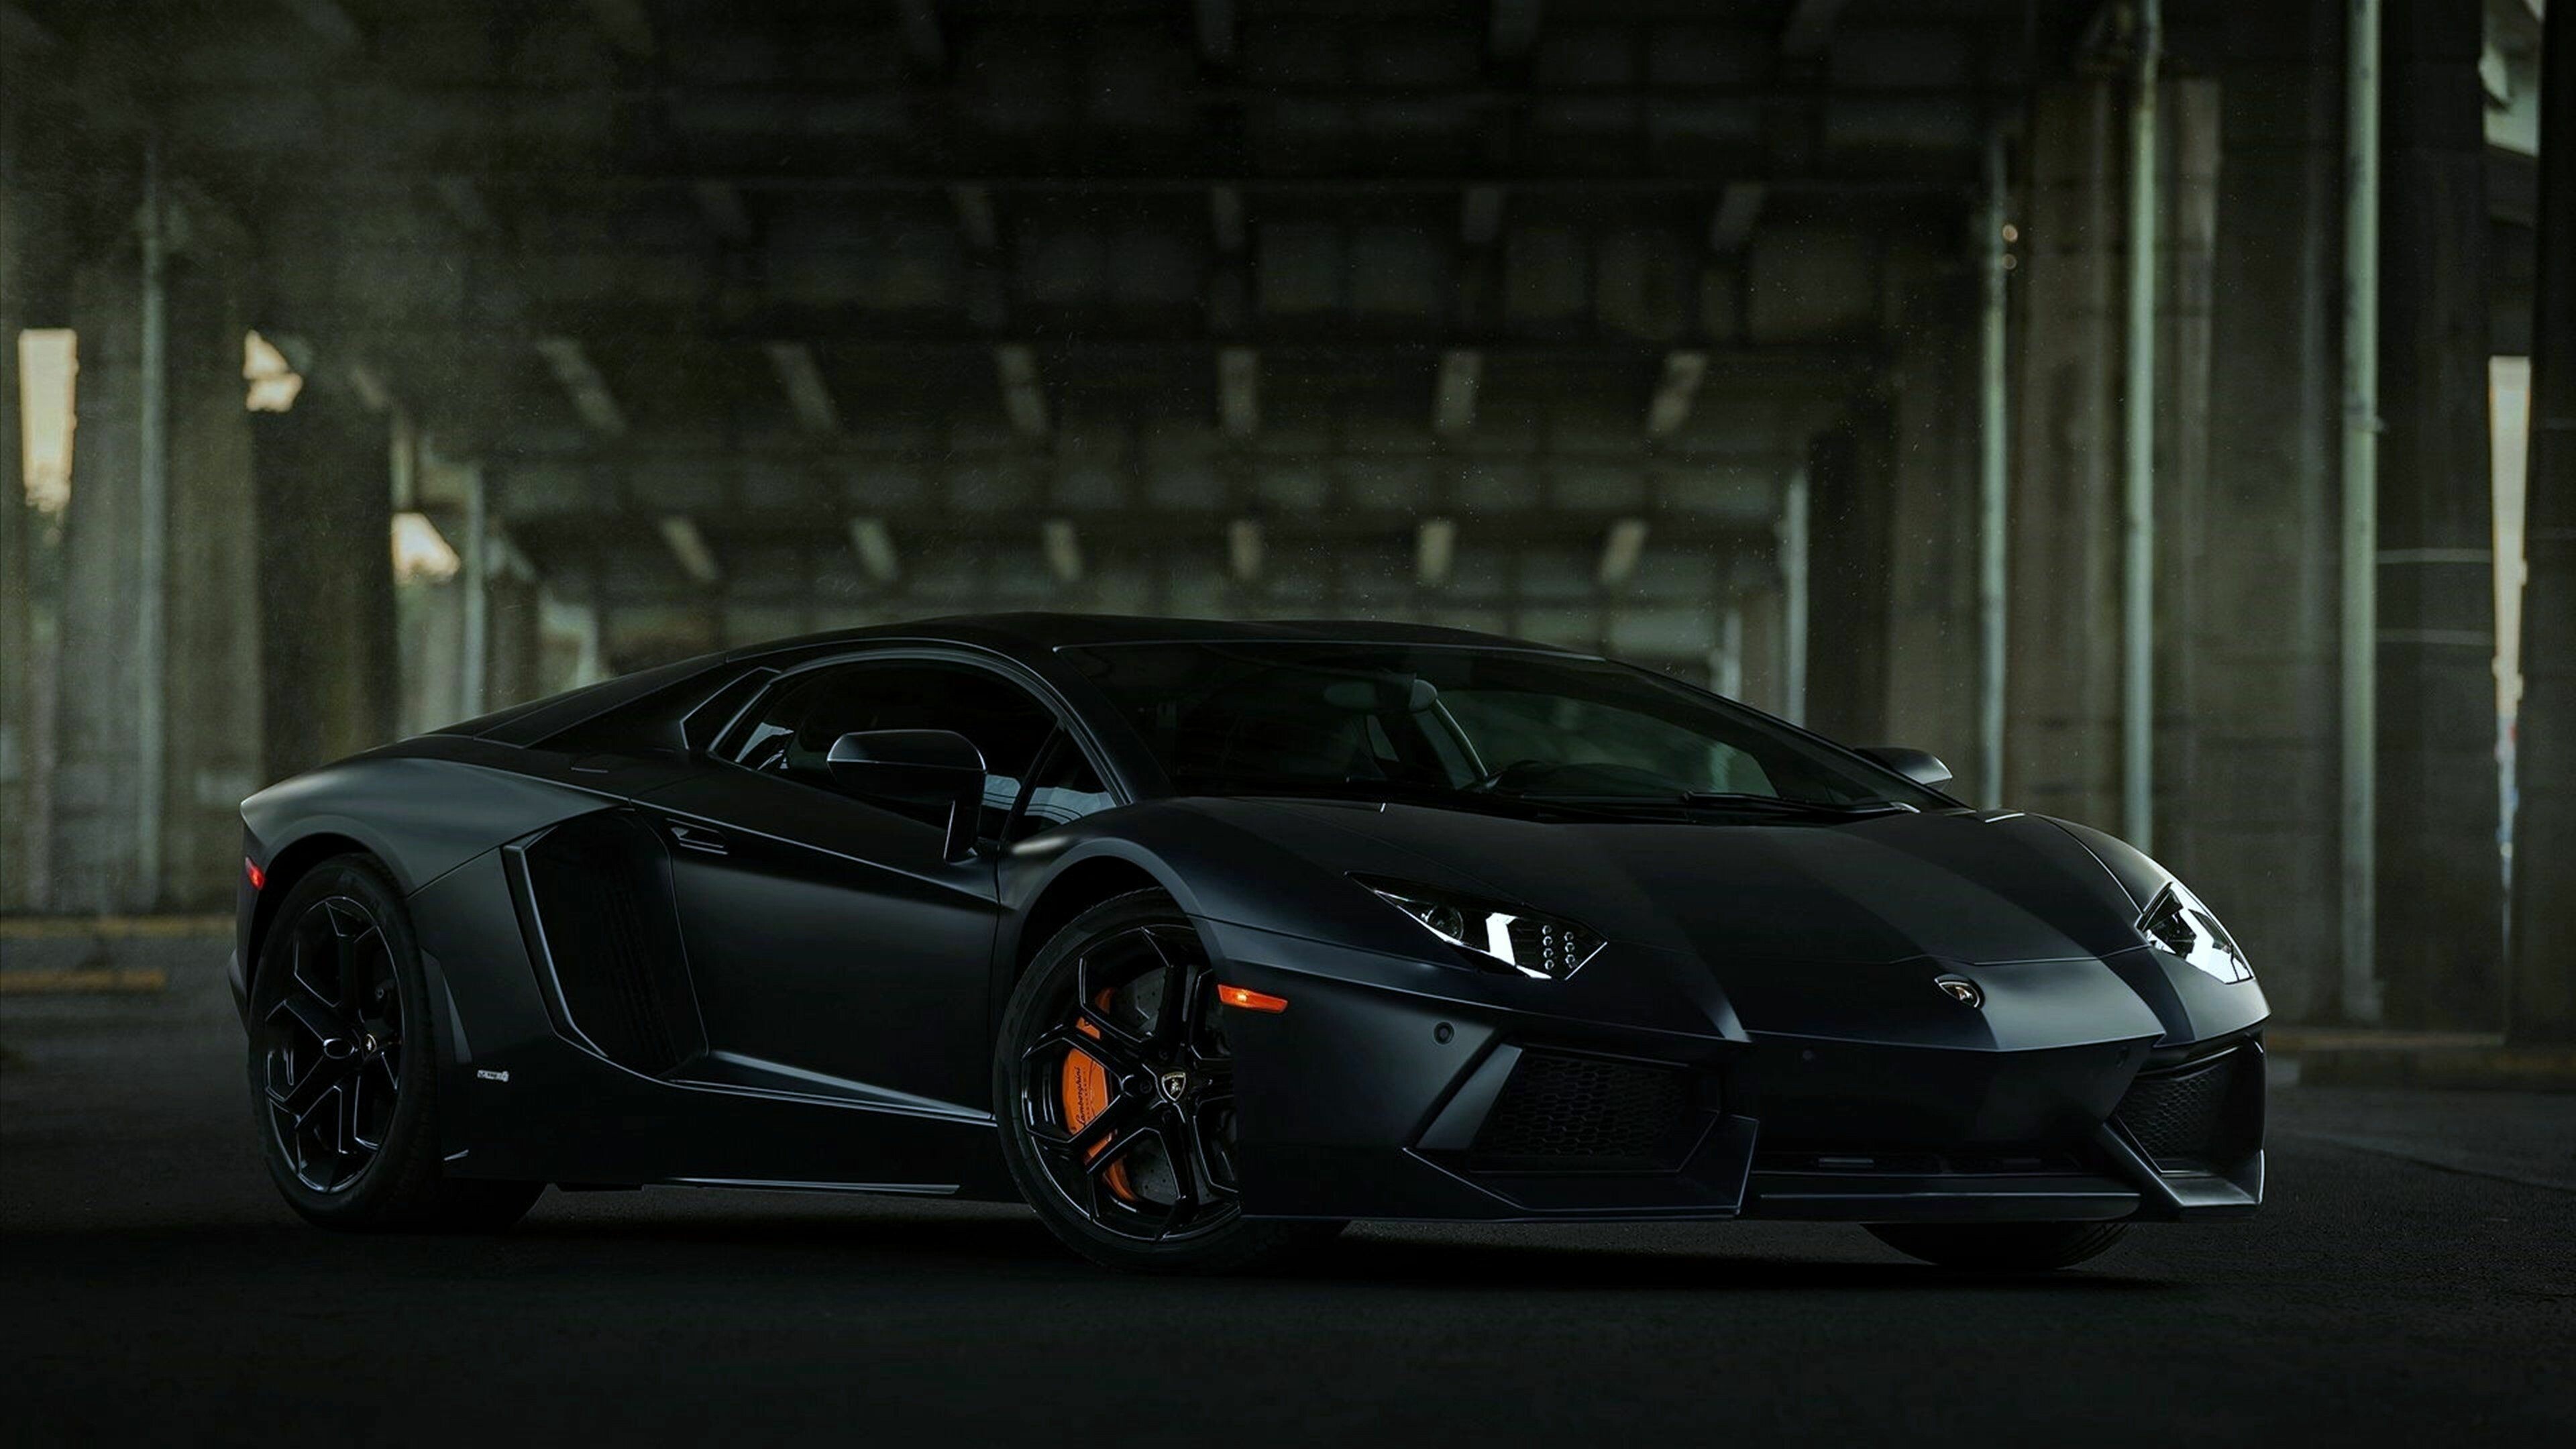 Lamborghini: Aventador, a mid-engine sports car, Italian company. 3840x2160 4K Wallpaper.